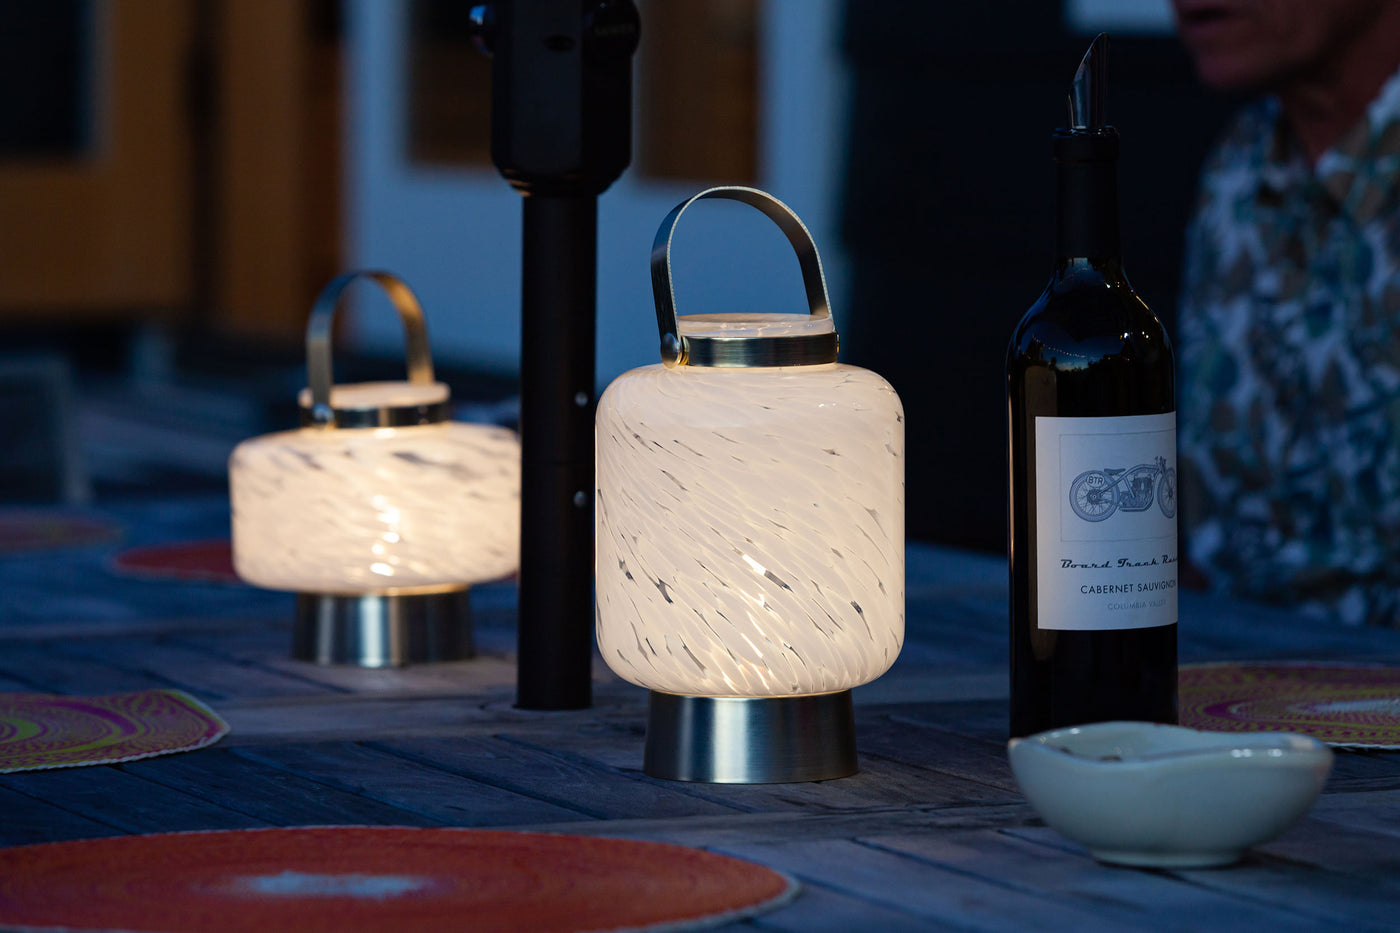 Two Illuminated LightKeeper Lanterns on an outdoor table near a bottle of wine.